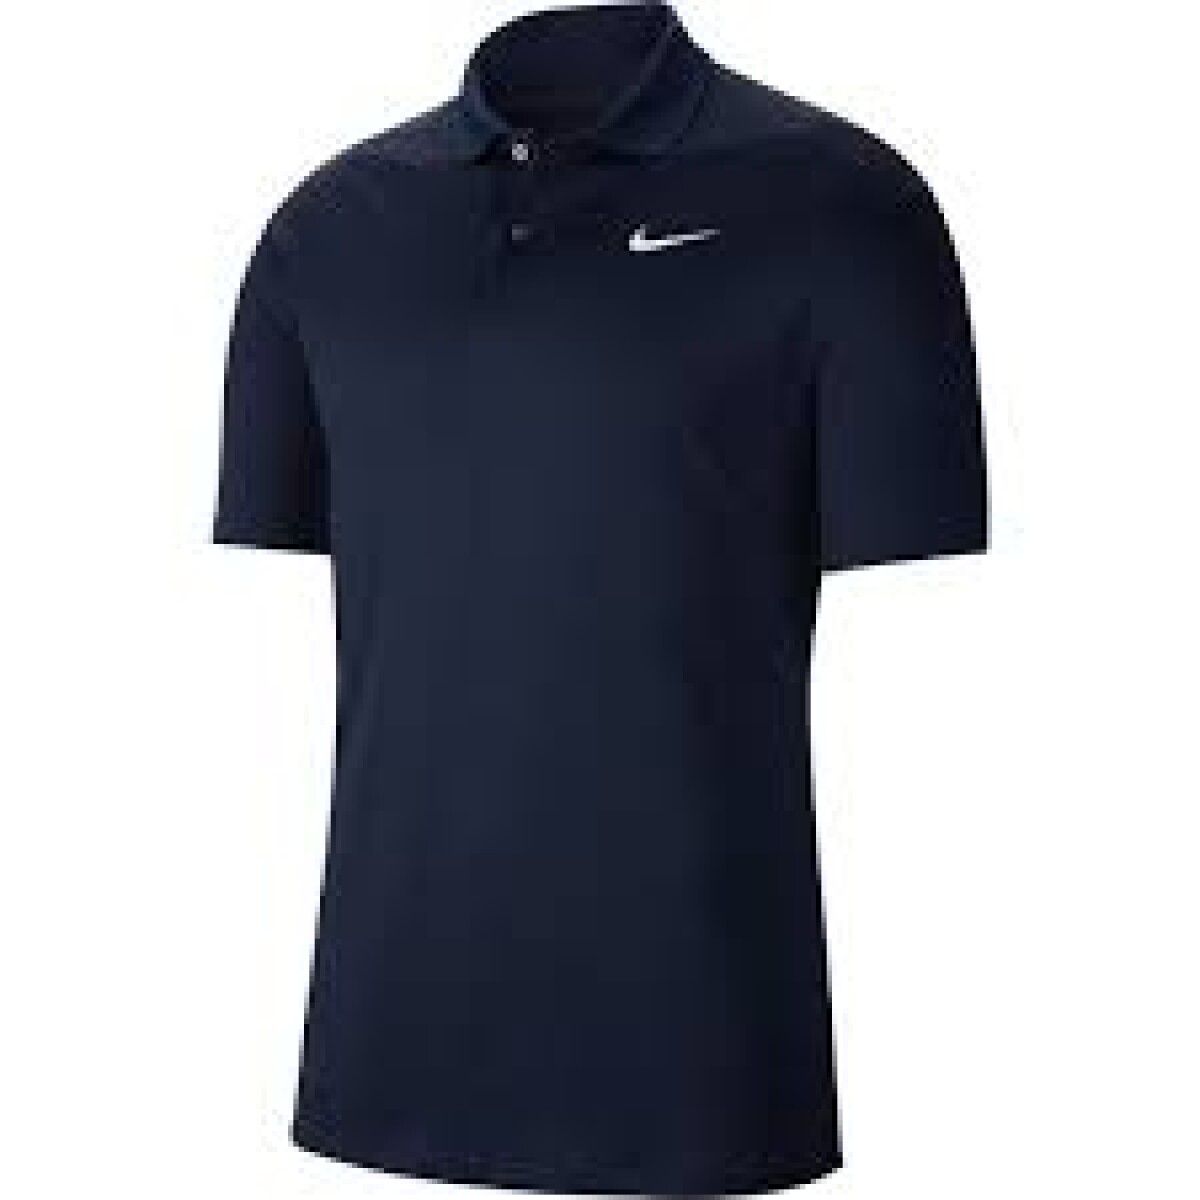 Remera Polo Nike Blue - S/C 